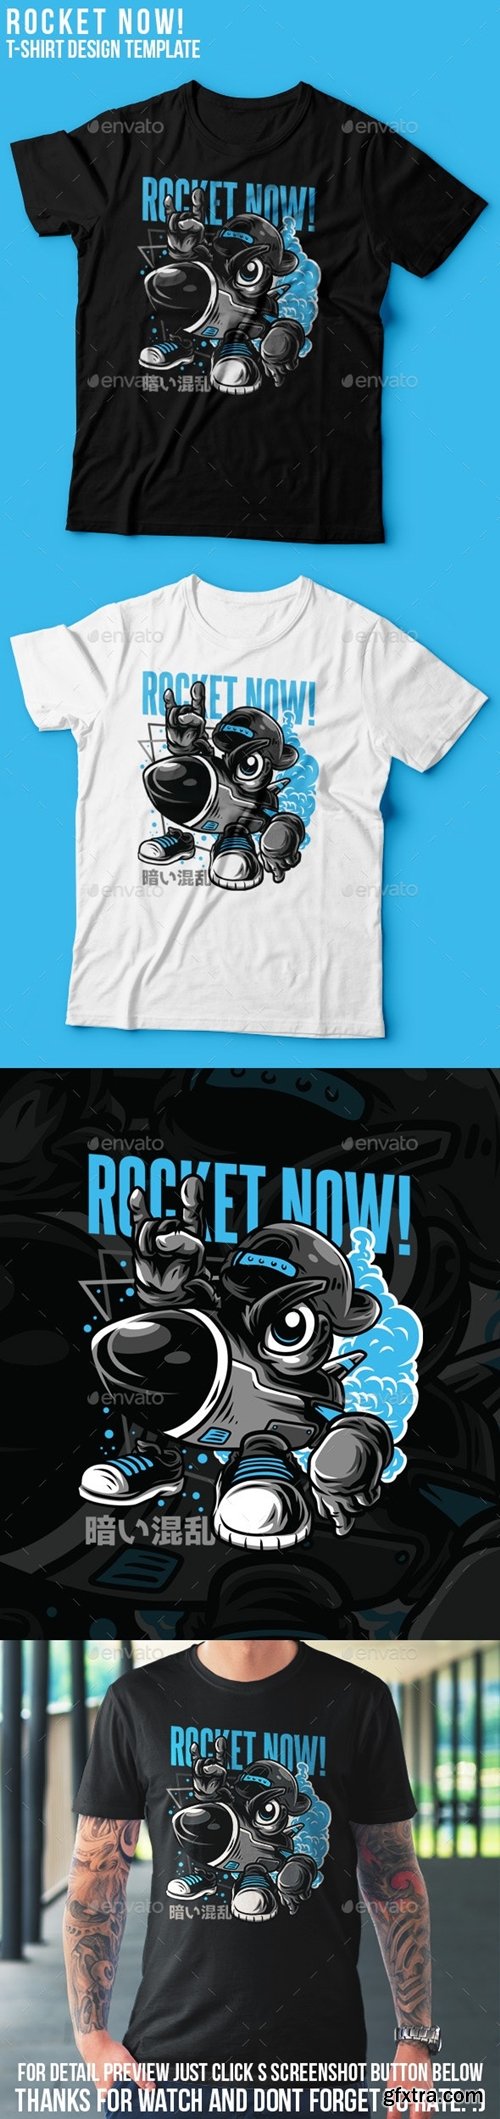 GraphicRiver - Rocket Now! T-Shirt Design 24731472